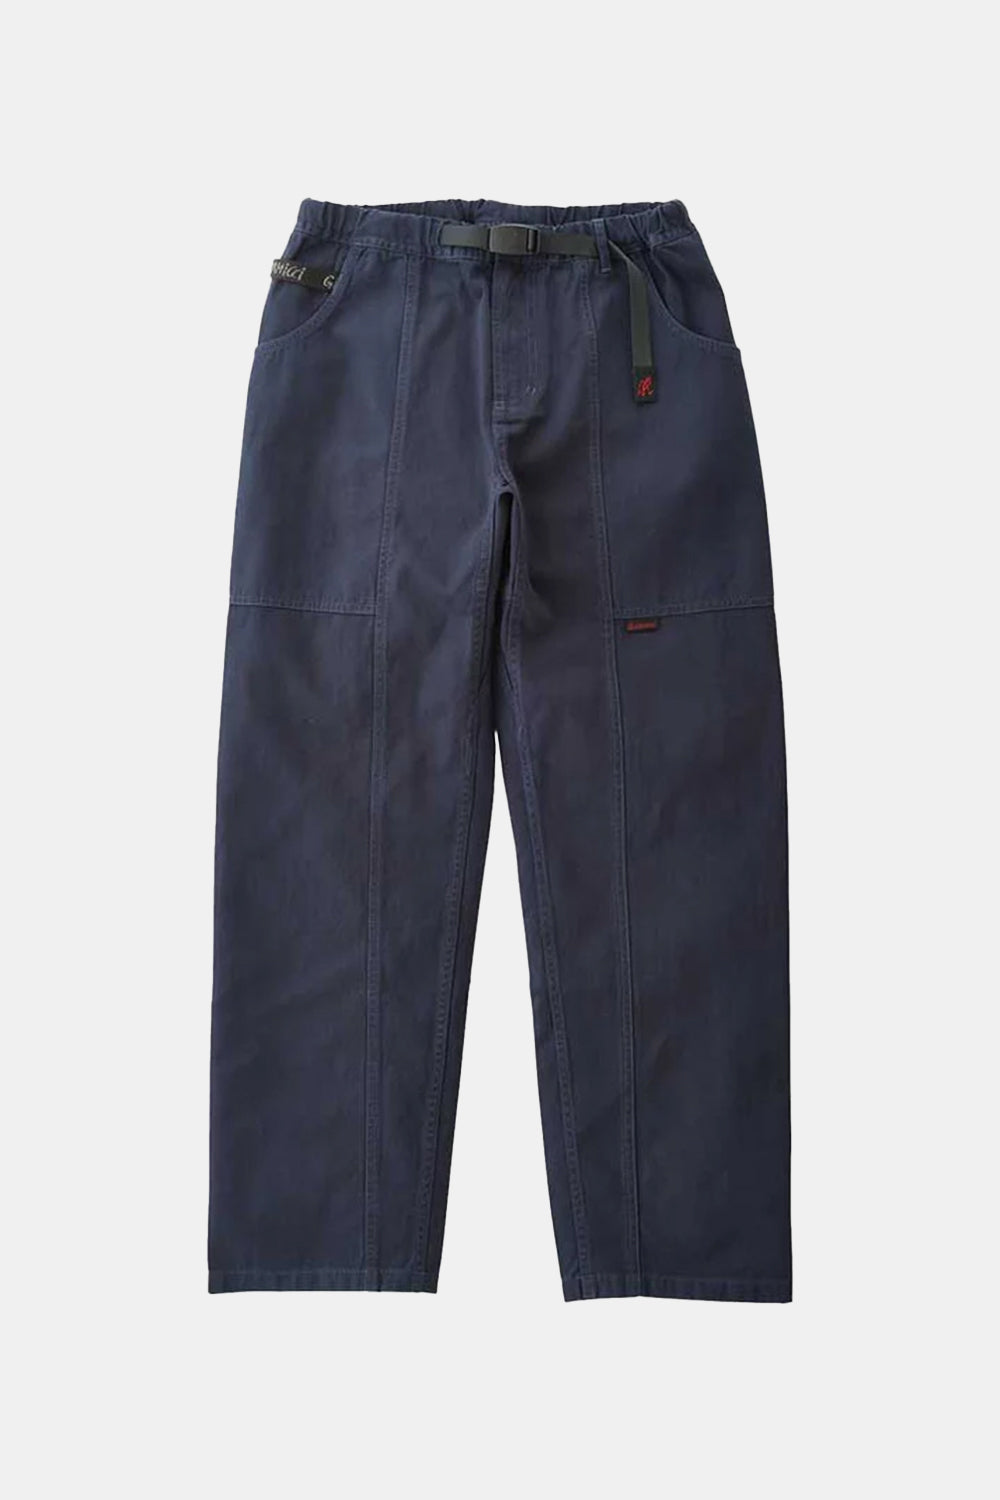 Gramicci Gadget Pants (Double Navy) | Number Six